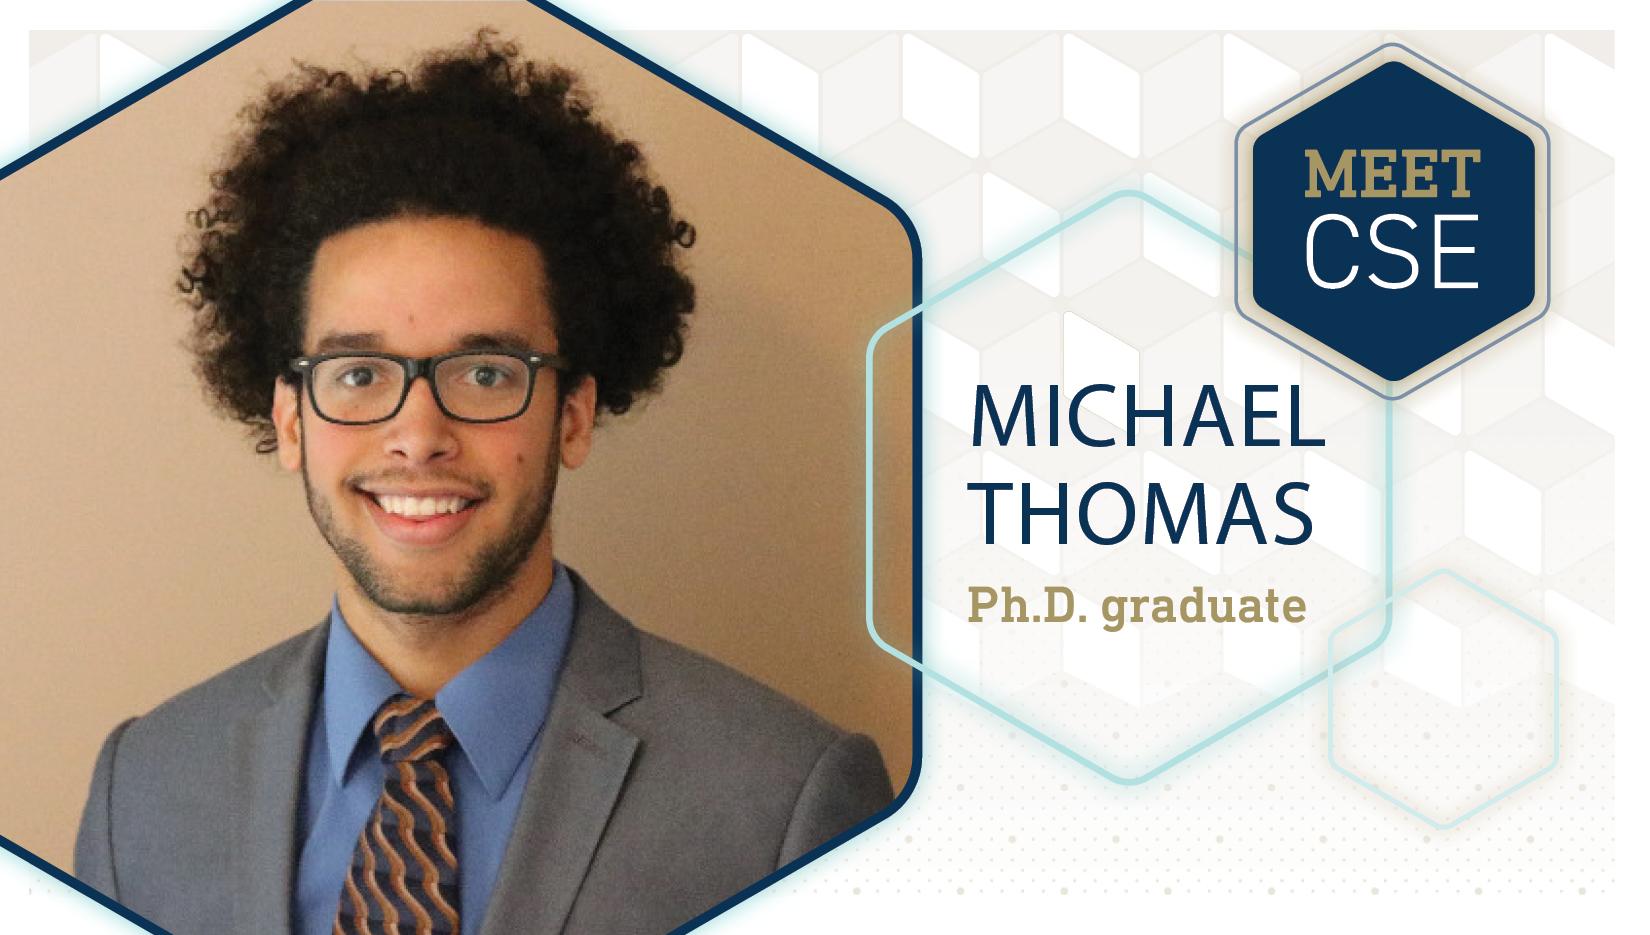 Meet CSE: Michael Thomas